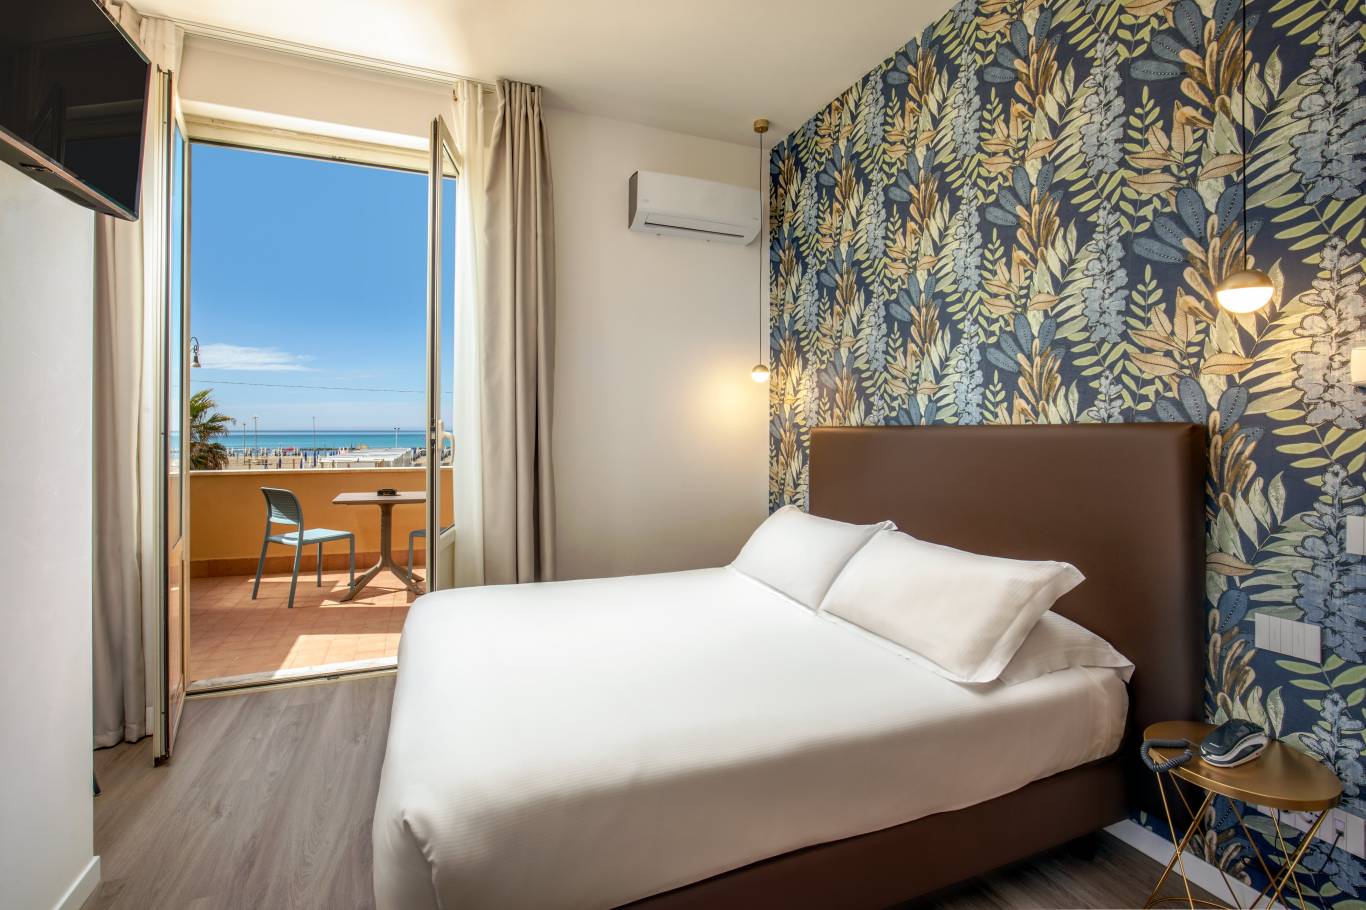 Hotel-La-Scaletta-Ostia-twin-room-with-view-17